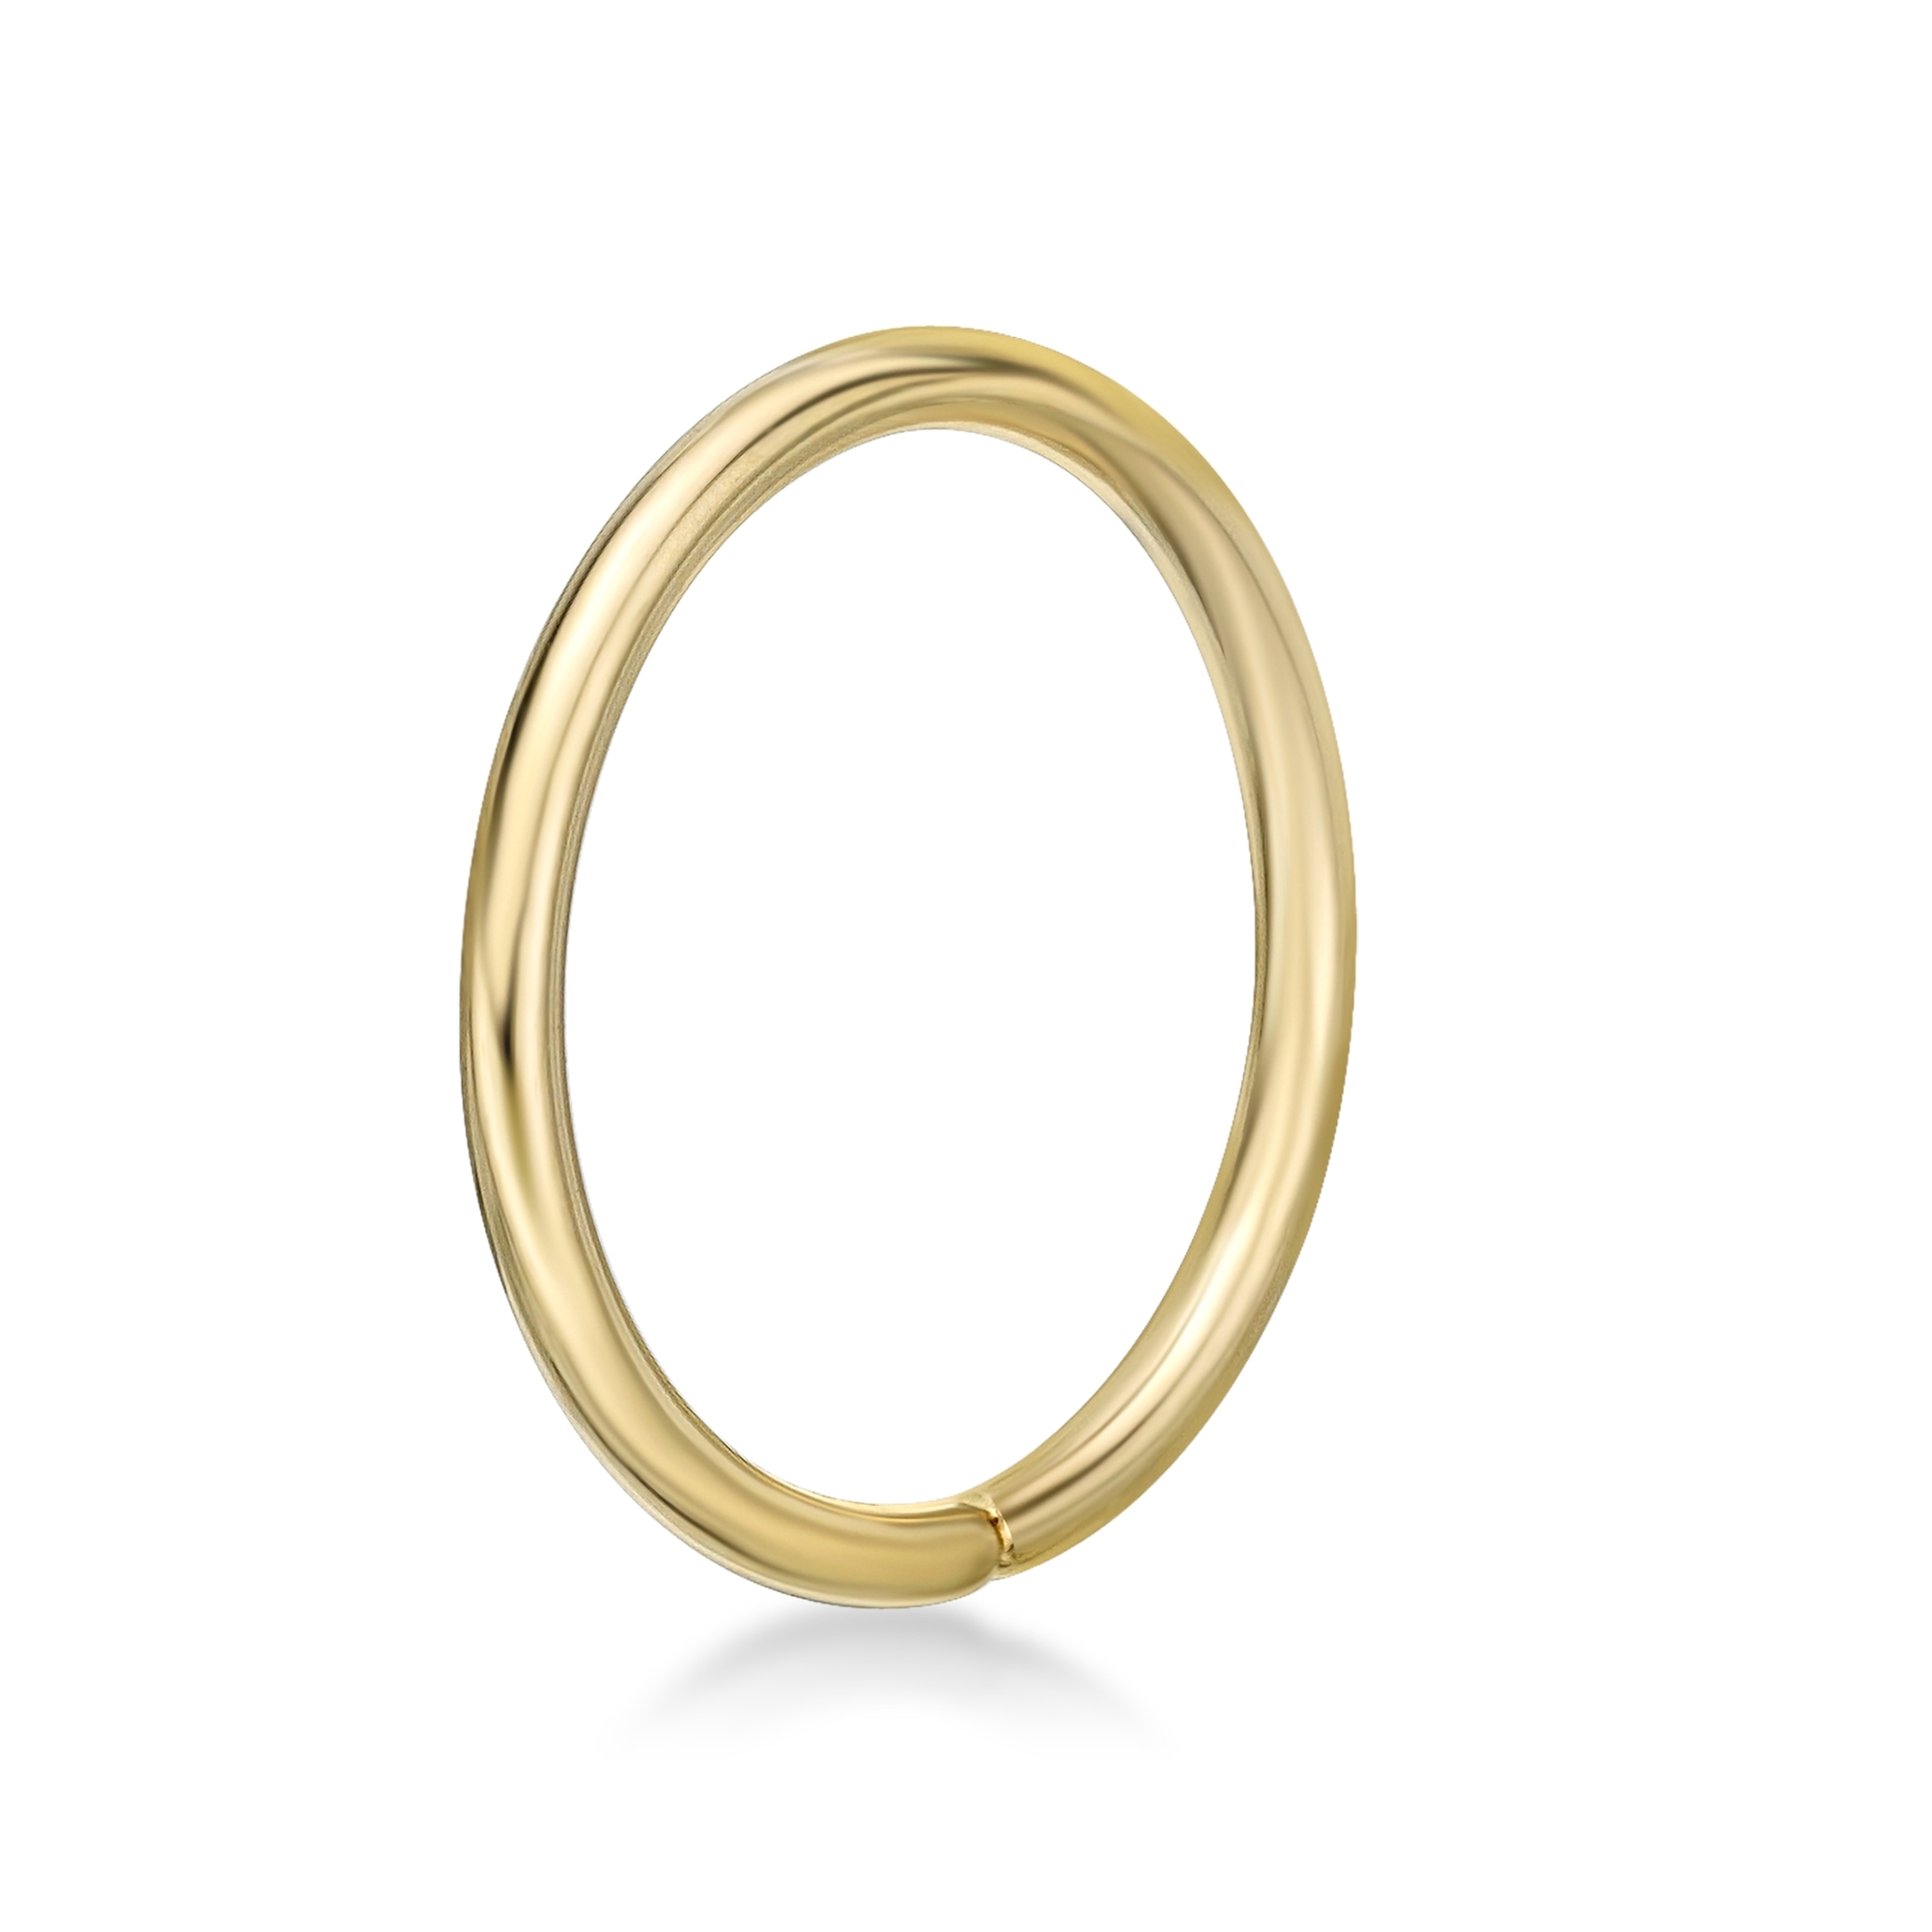 Lavari Jewelers Women's Hoop Nose Ring, 14K Yellow Gold, 8 MM Diameter, 20 Gauge